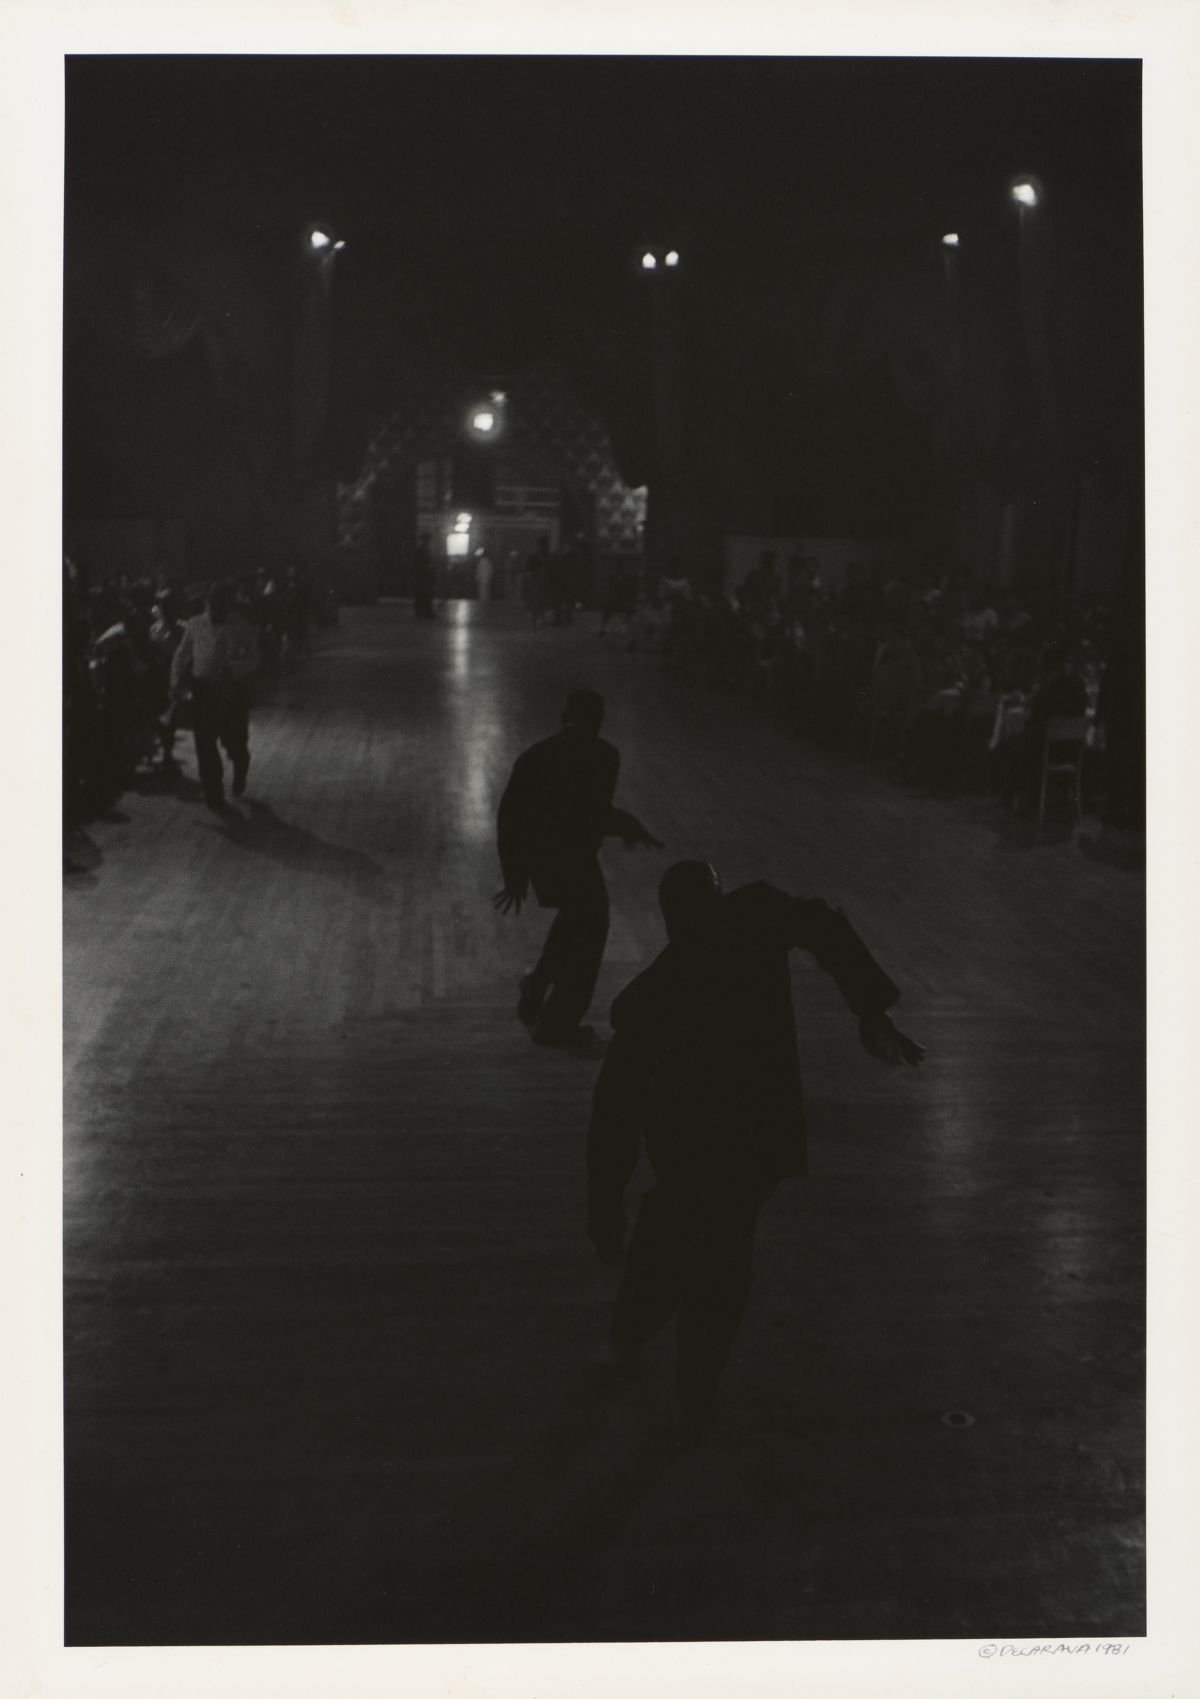 Roy DeCarava, Dancers, 1956

